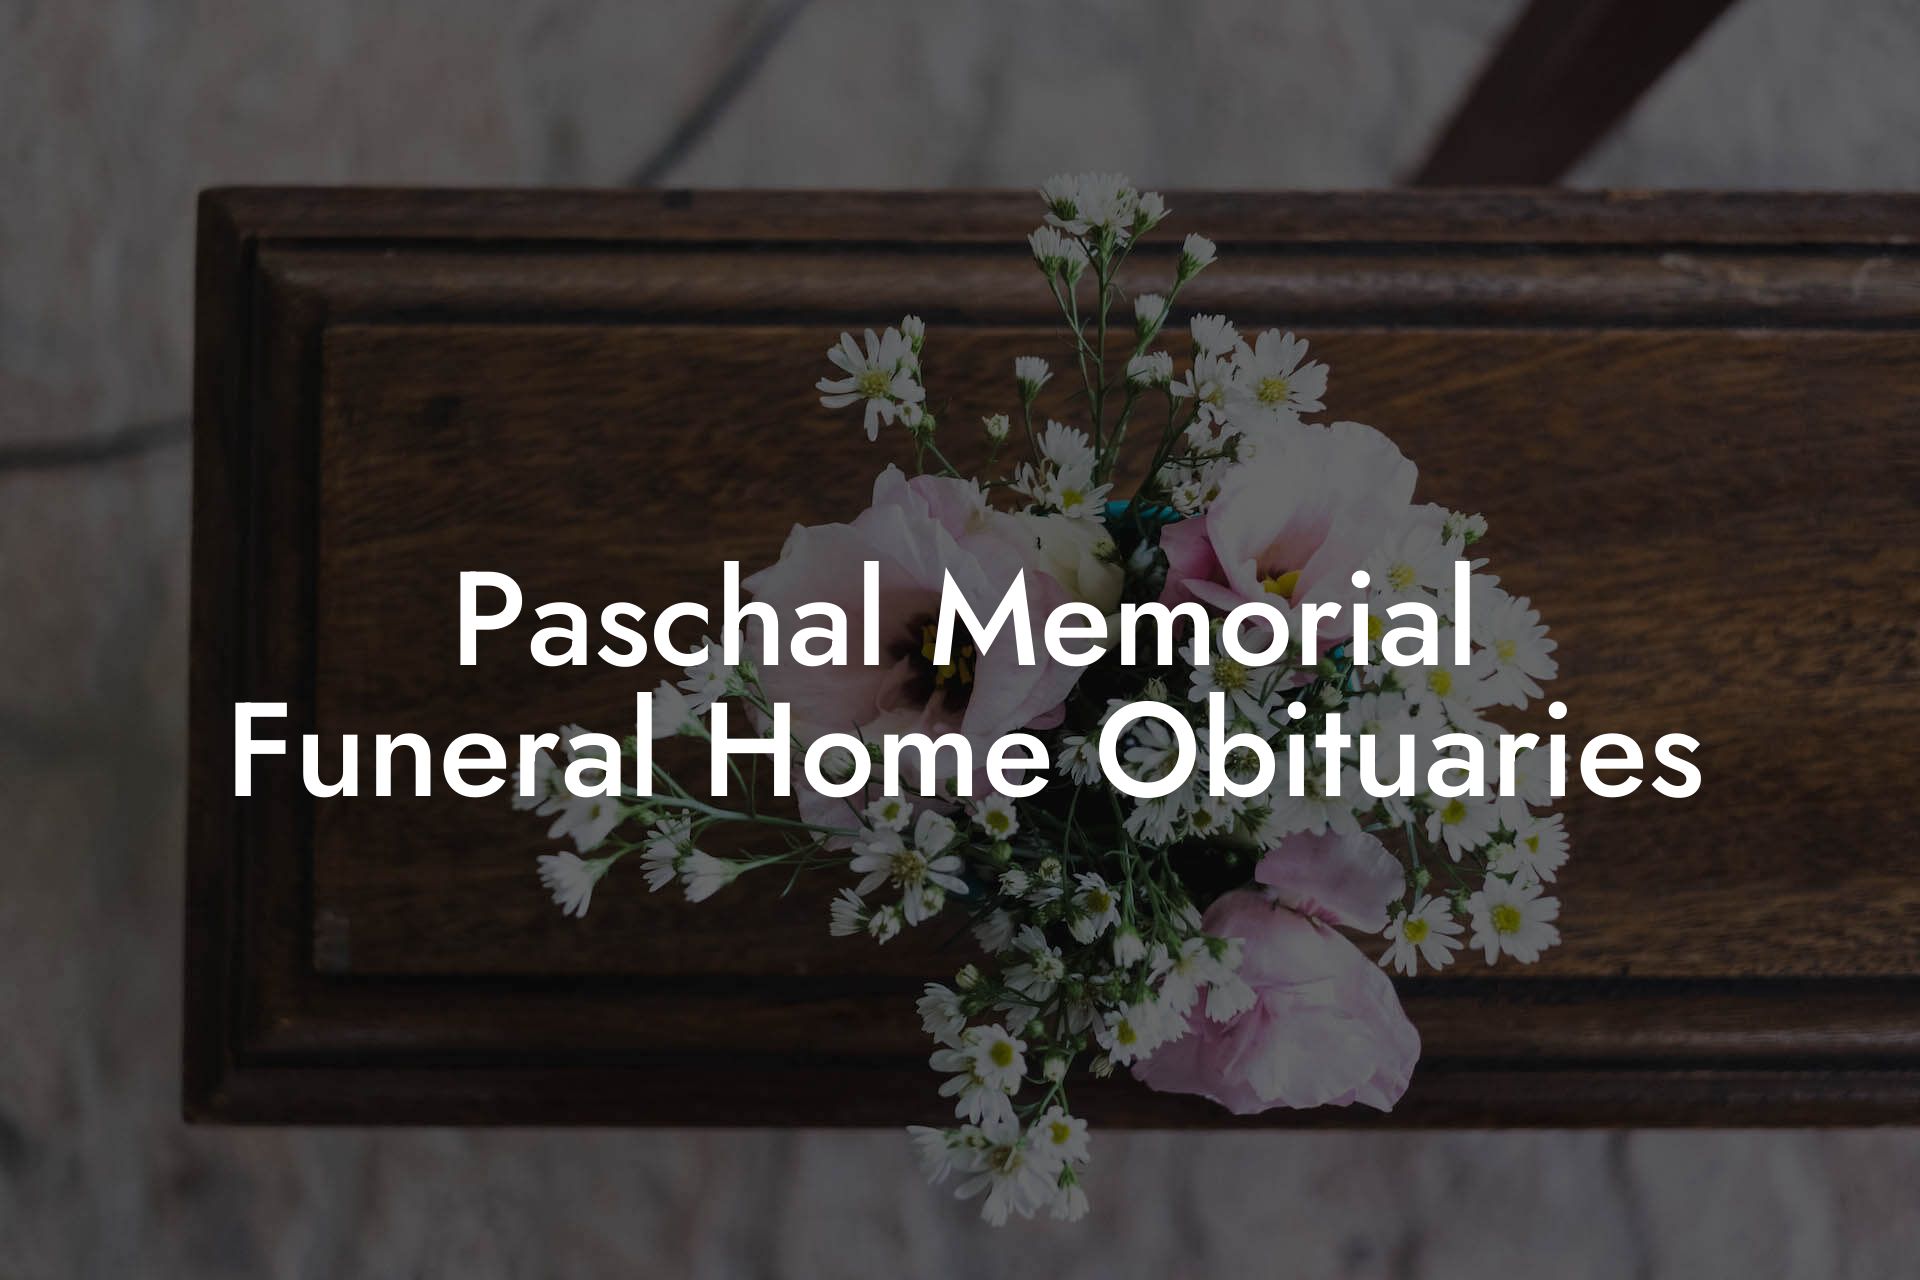 Paschal Memorial Funeral Home Obituaries